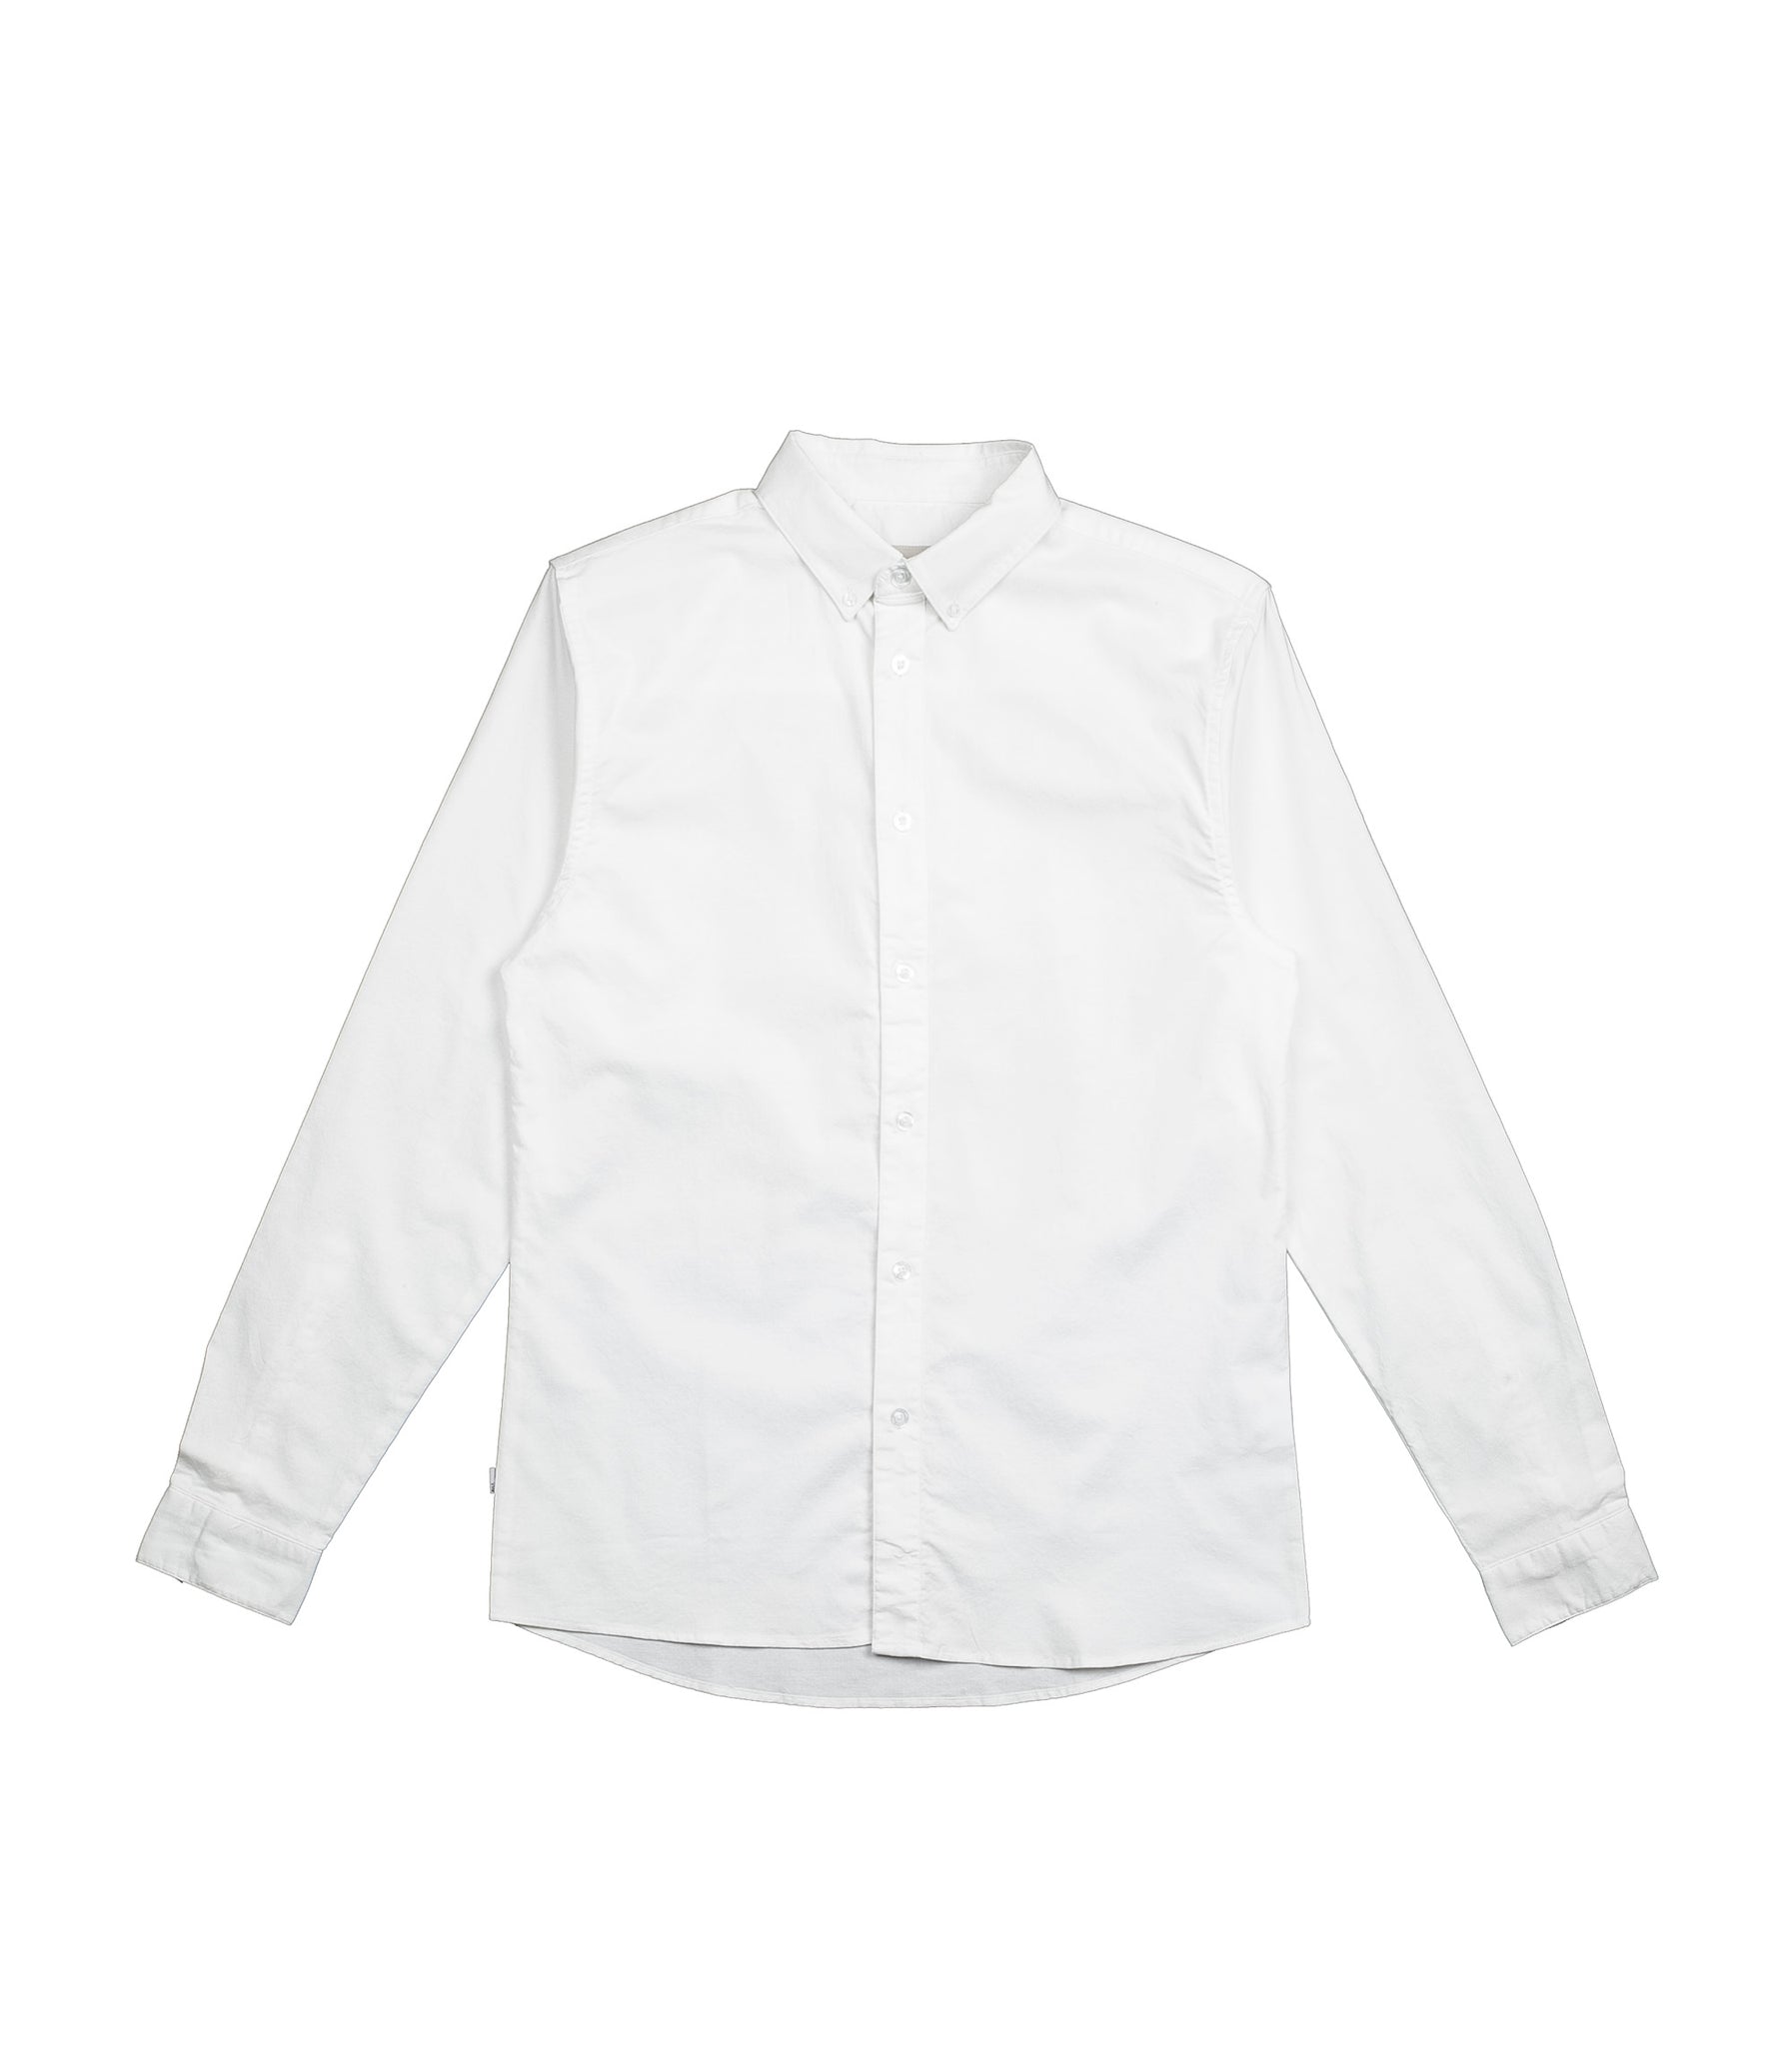 Revolution Oluf Button Down White Oxford Shirt